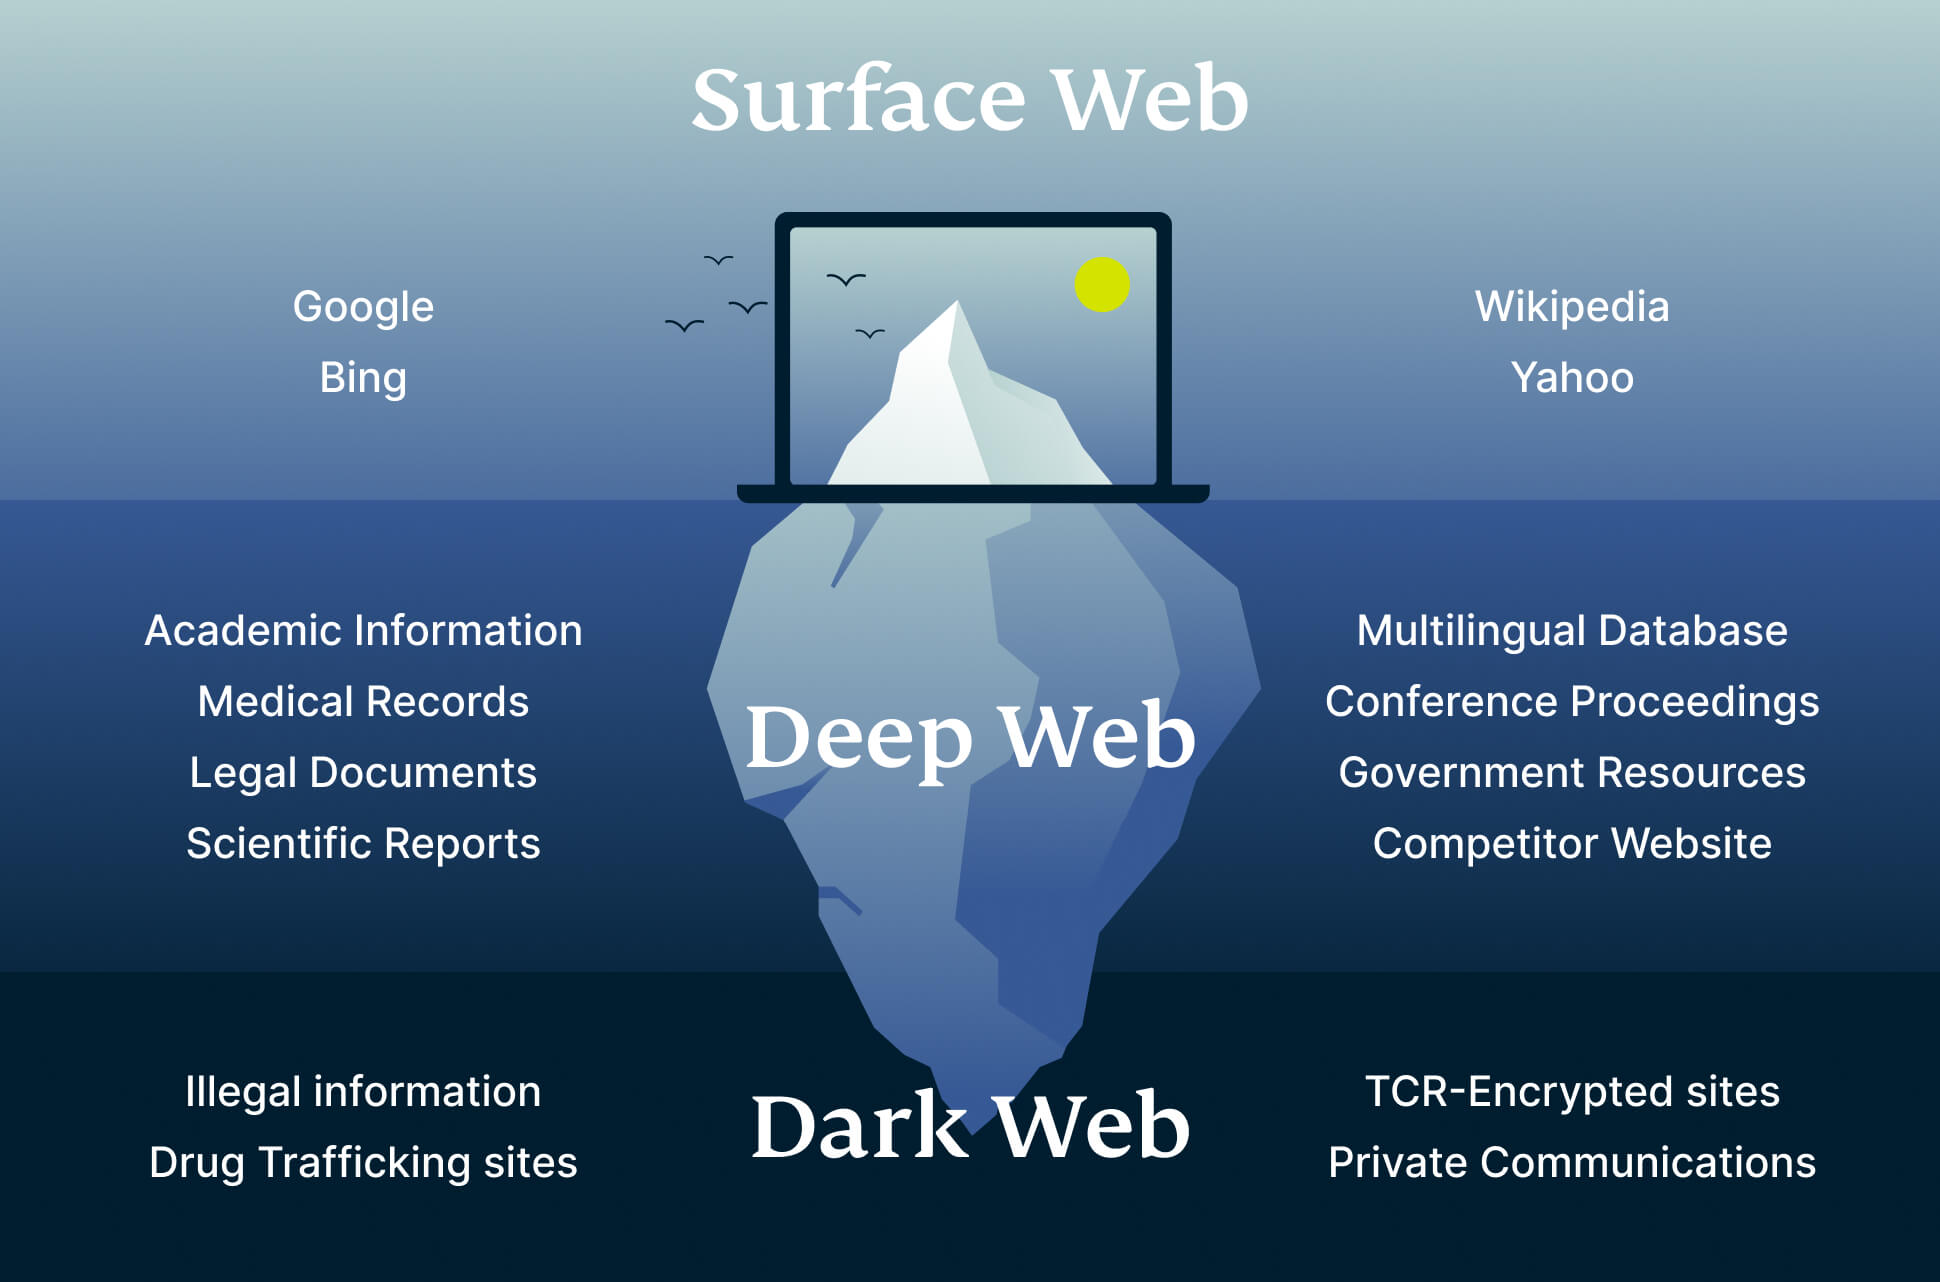 Deep web vs. Dark Web